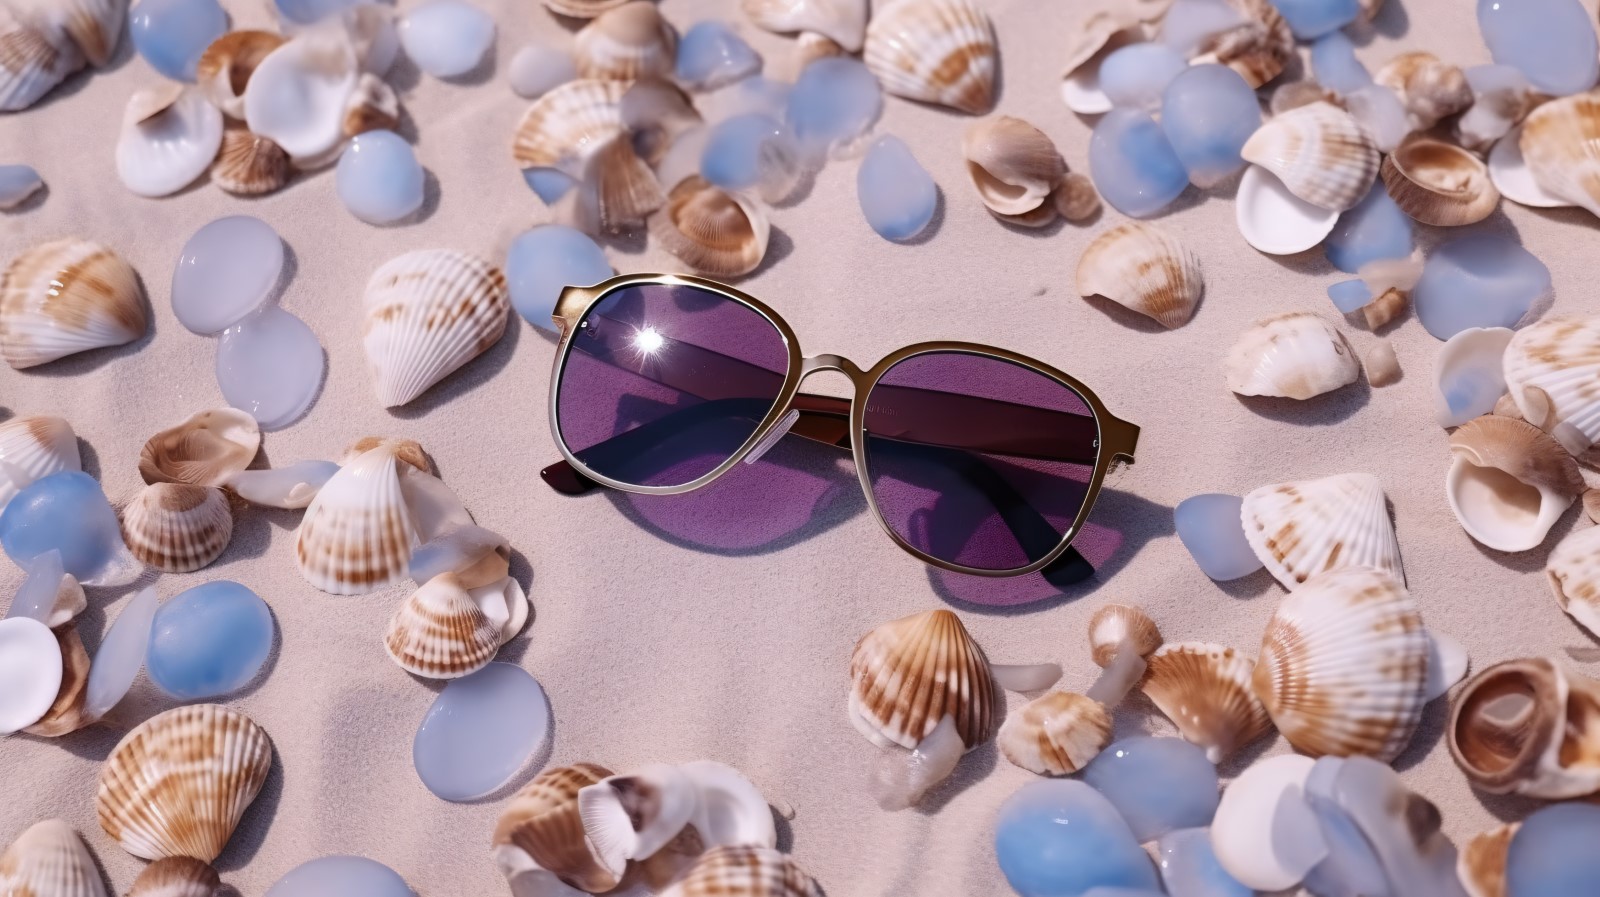 Sunglasses seashells and beach accessories on sandy beach 189